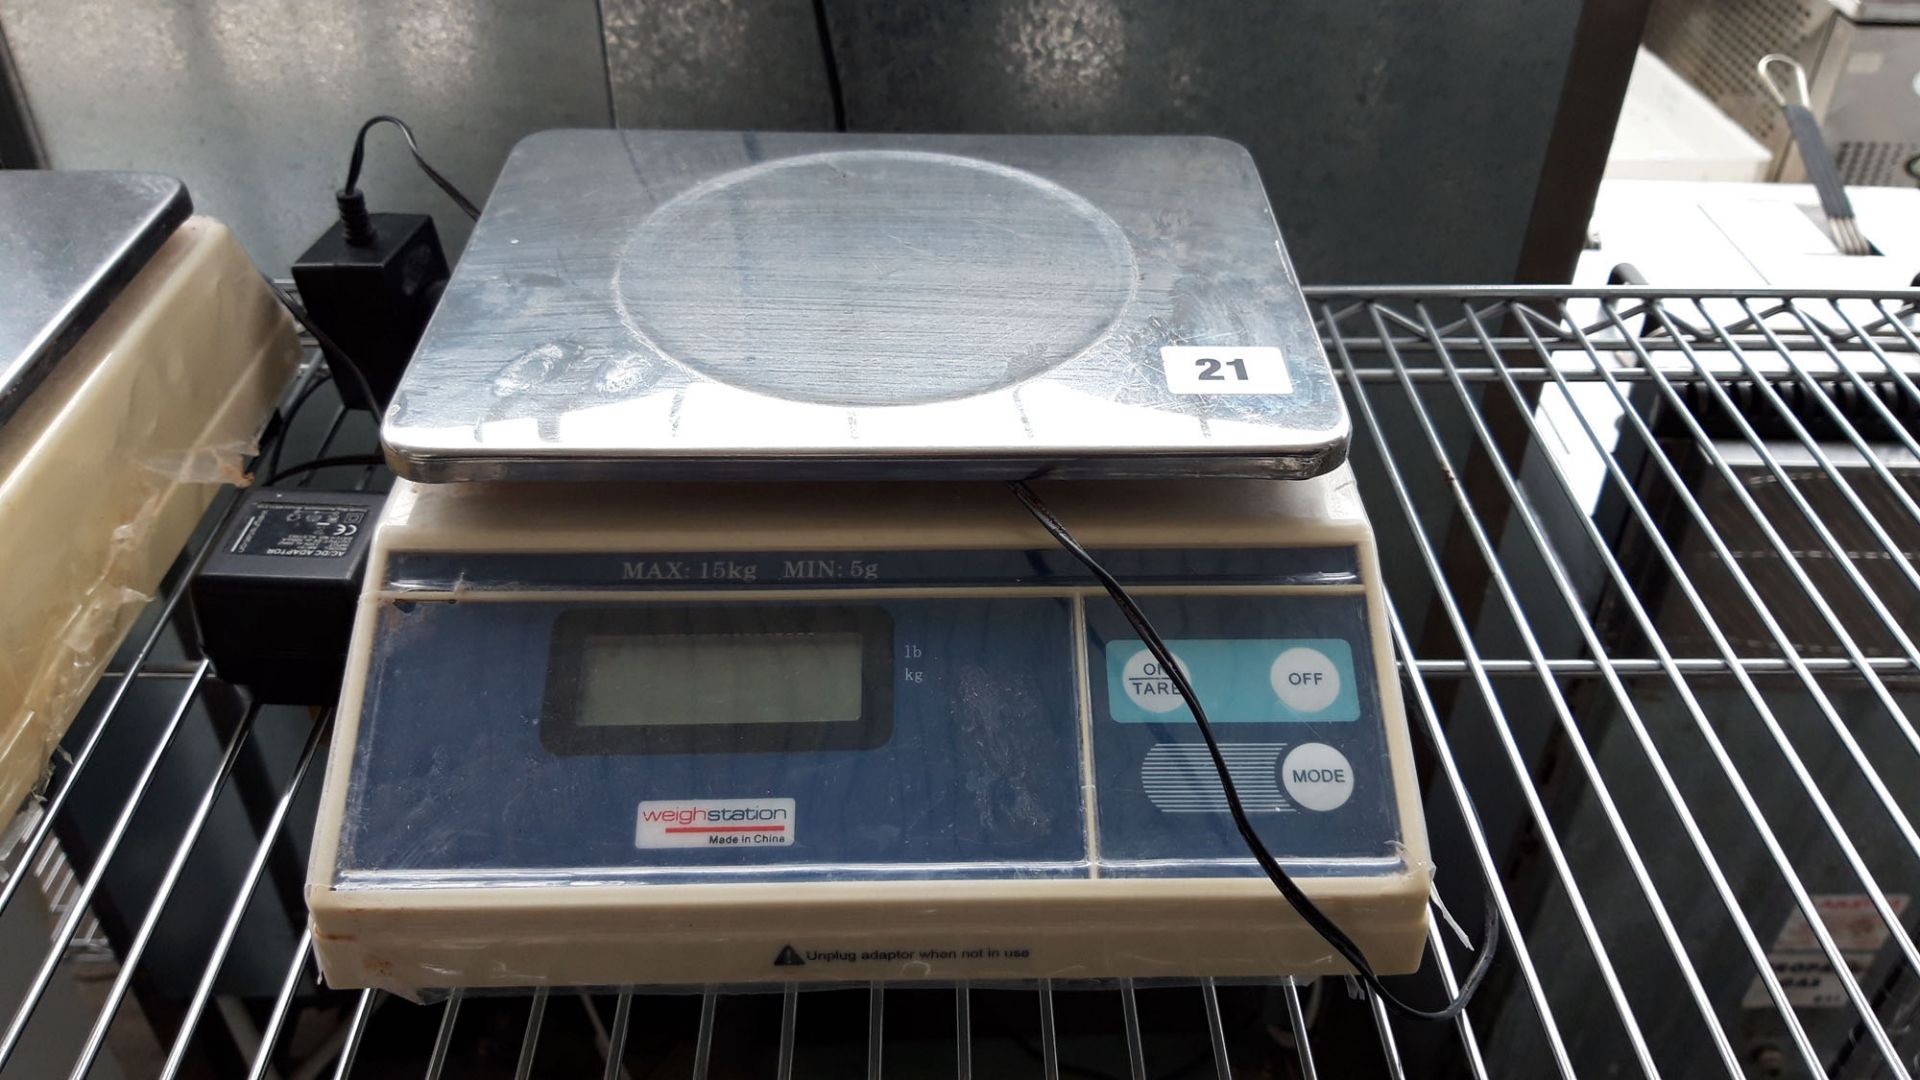 Weighstation 15kg capacity digital weighing scales